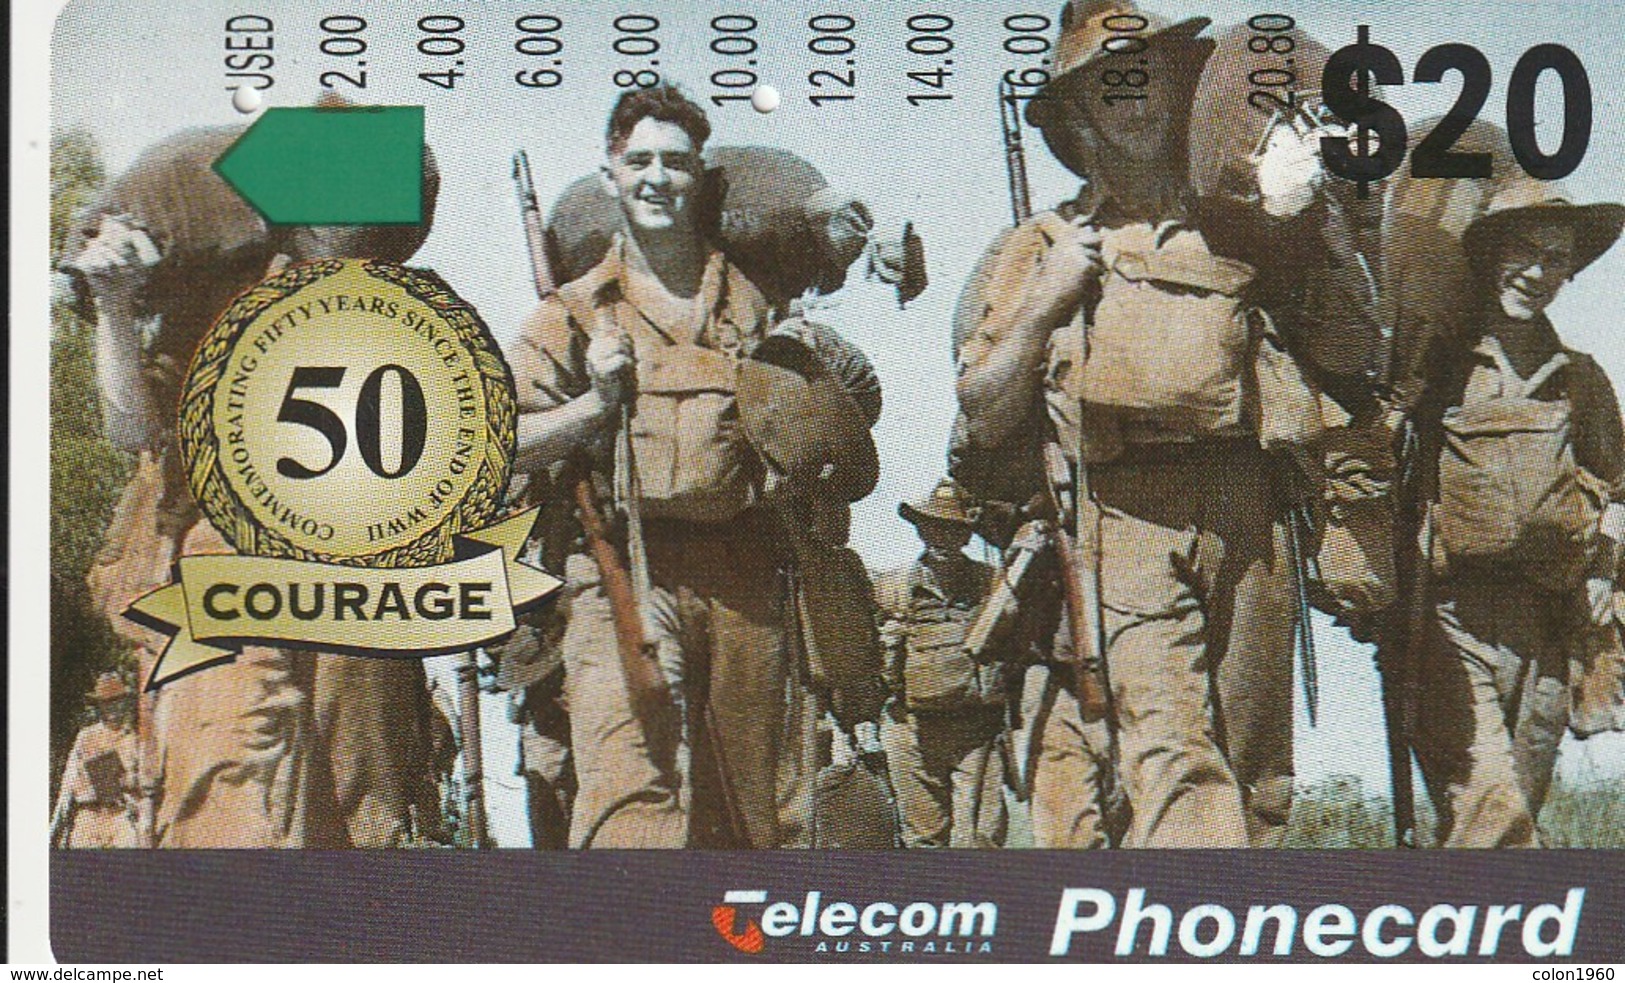 TARJETA TELEFONICA DE AUSTRALIA. AVIONES. 50 Years Since The End Of World War II/Courage. AUS-M-281. (089). - Armada